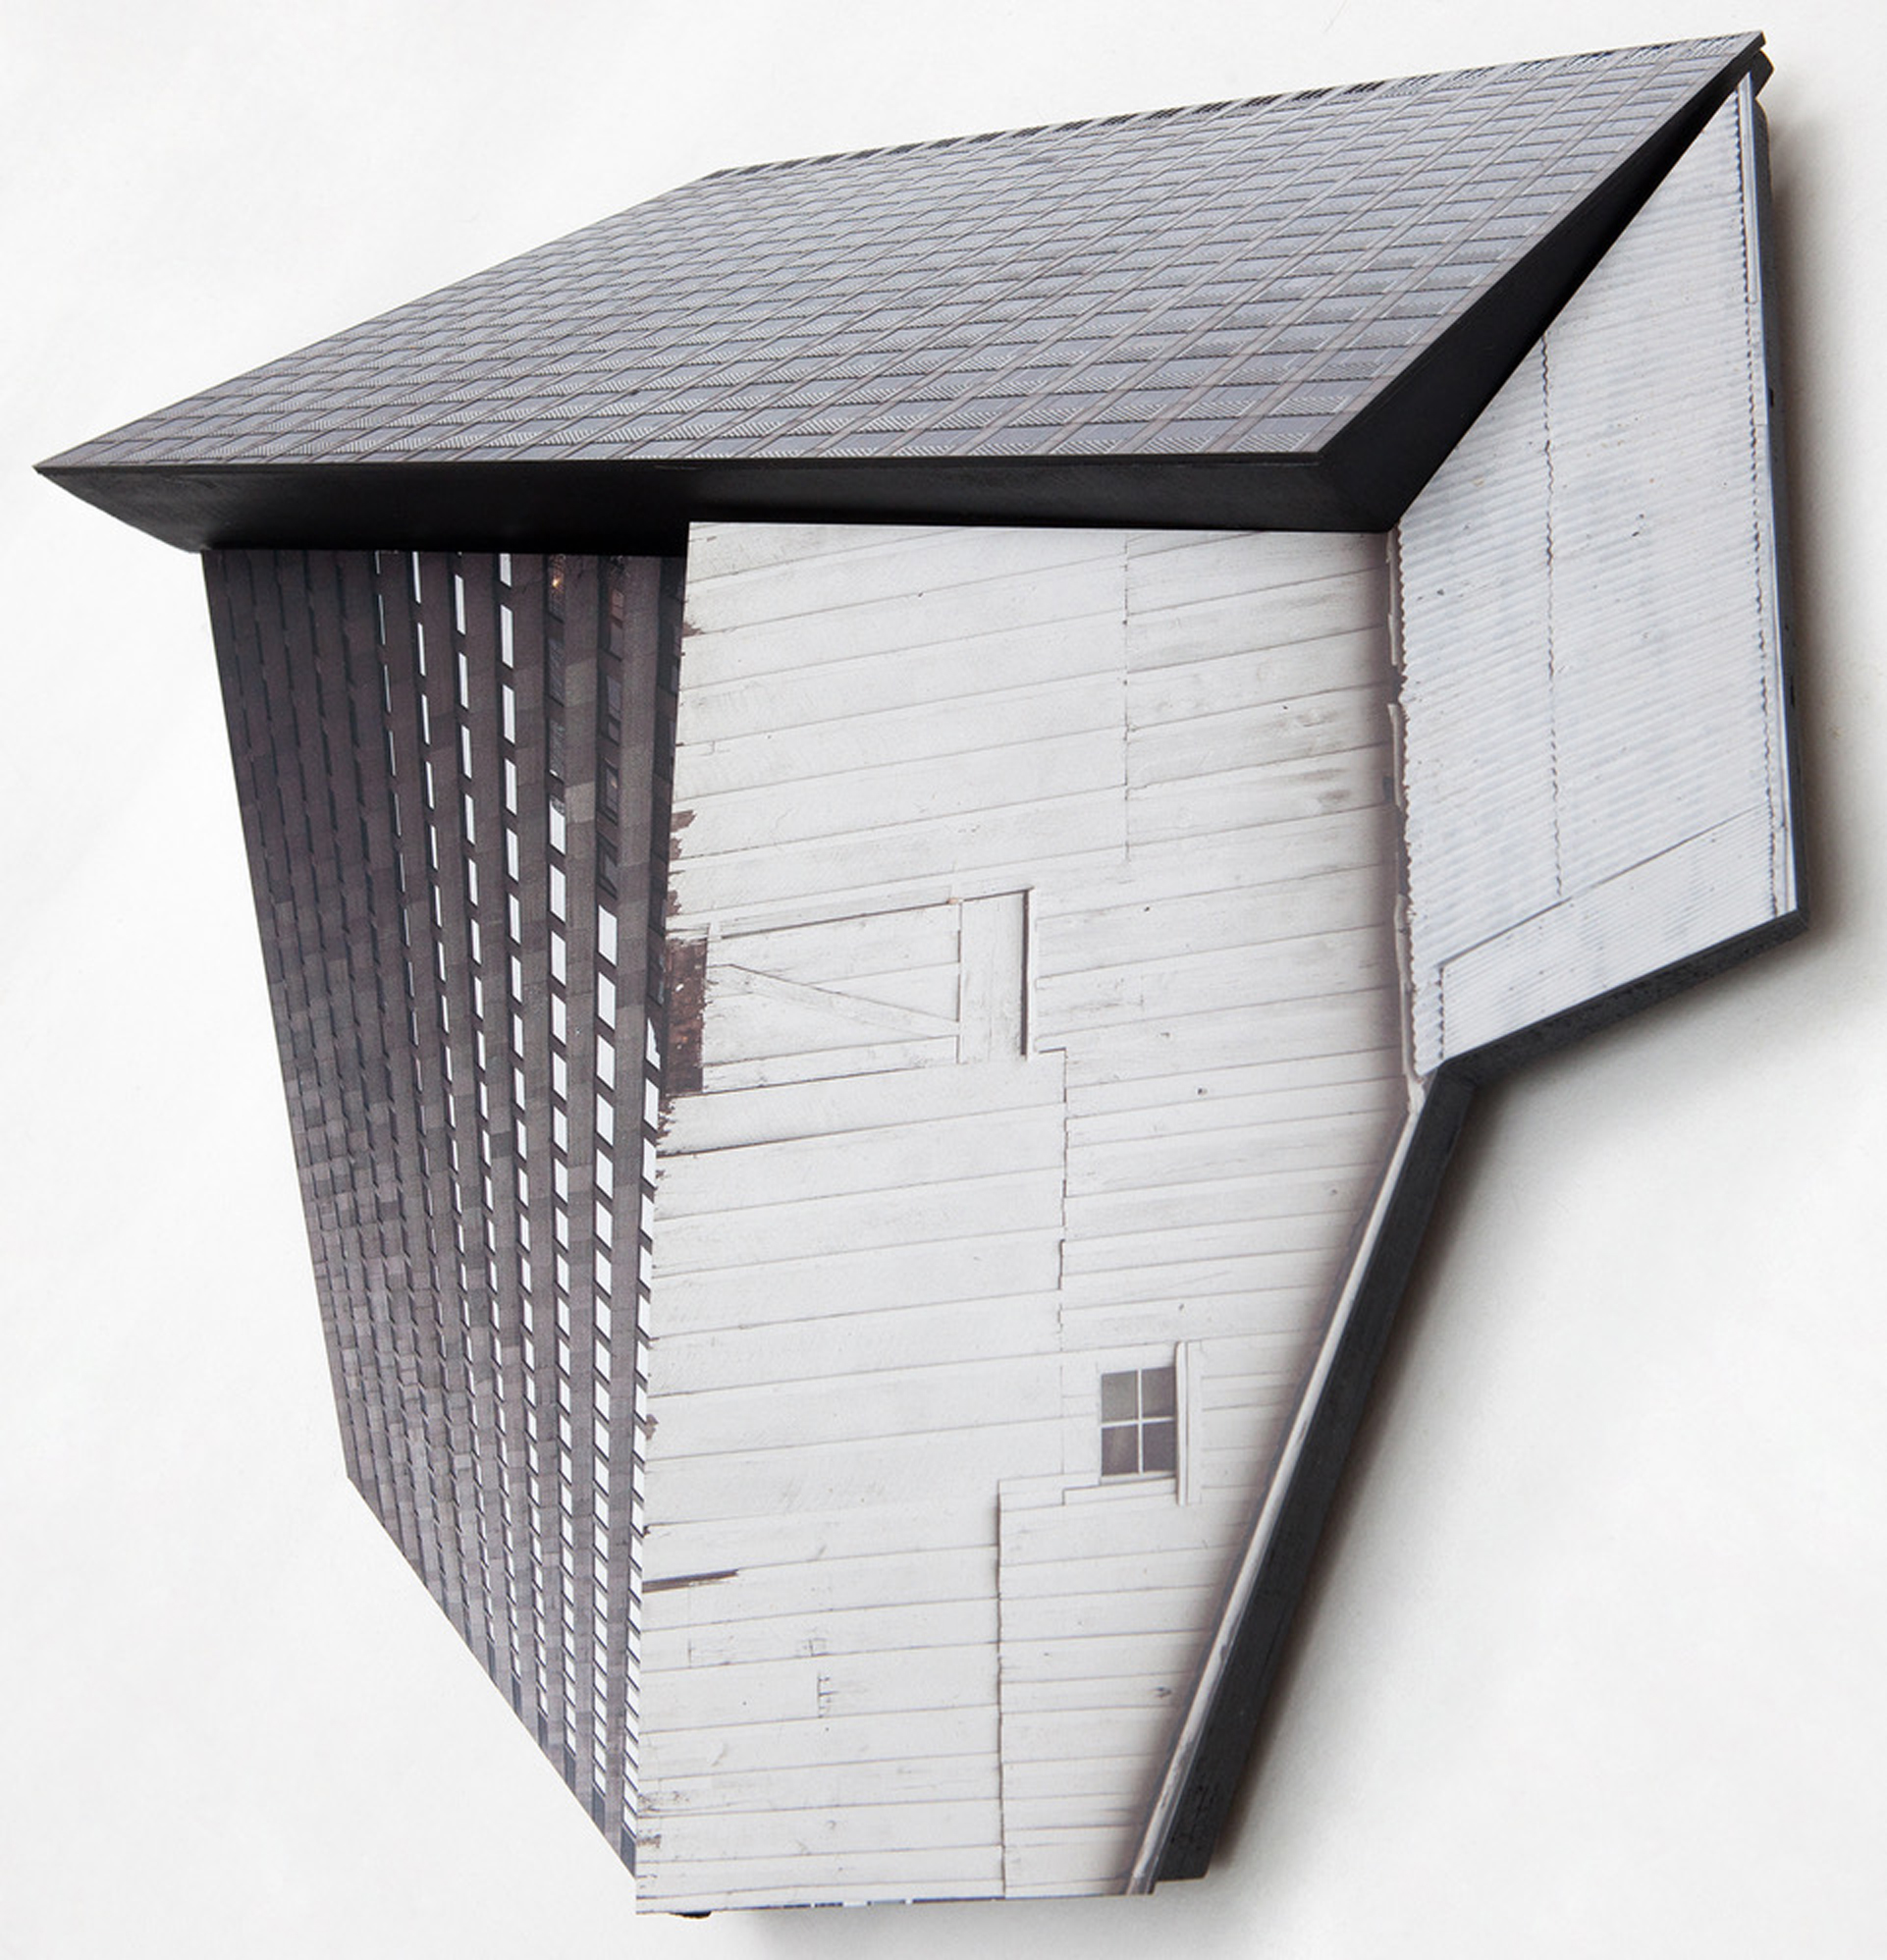 KRISTA SVALBONAS | Migrator 1, 16 x 18 x 3 inches / 40.5 x 45.5 x 7.5 cm, UV print on dibond and wood, 2015